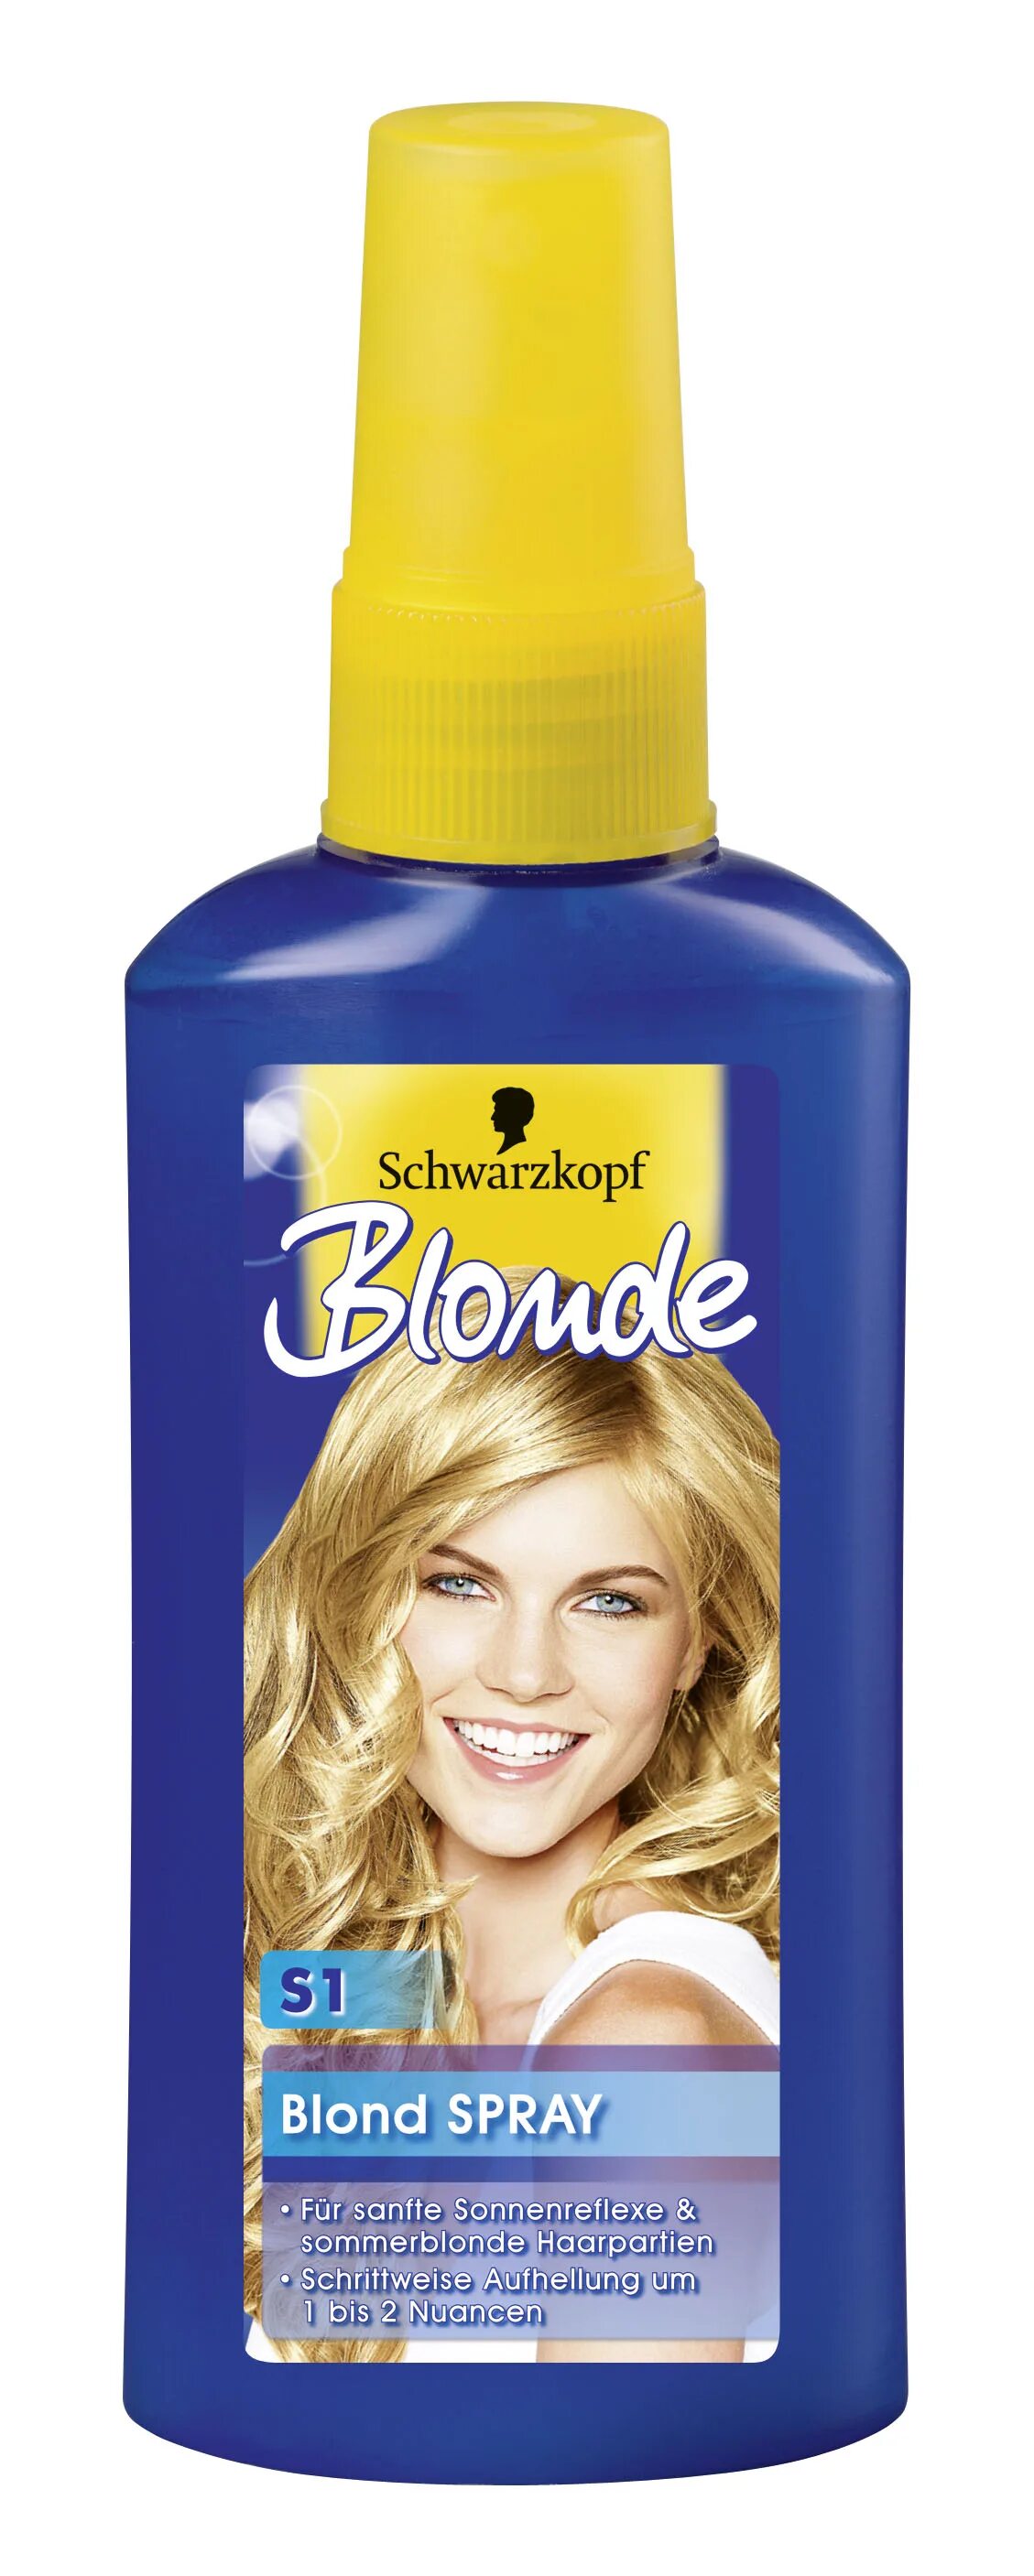 Blonde спрей. Schwarzkopf Nordic blonde спрей. Осветляющий спрей шварцкопф blonde. Осветляющий спрей для волос Schwarzkopf blonde. Осветляющий спрей Nordic.